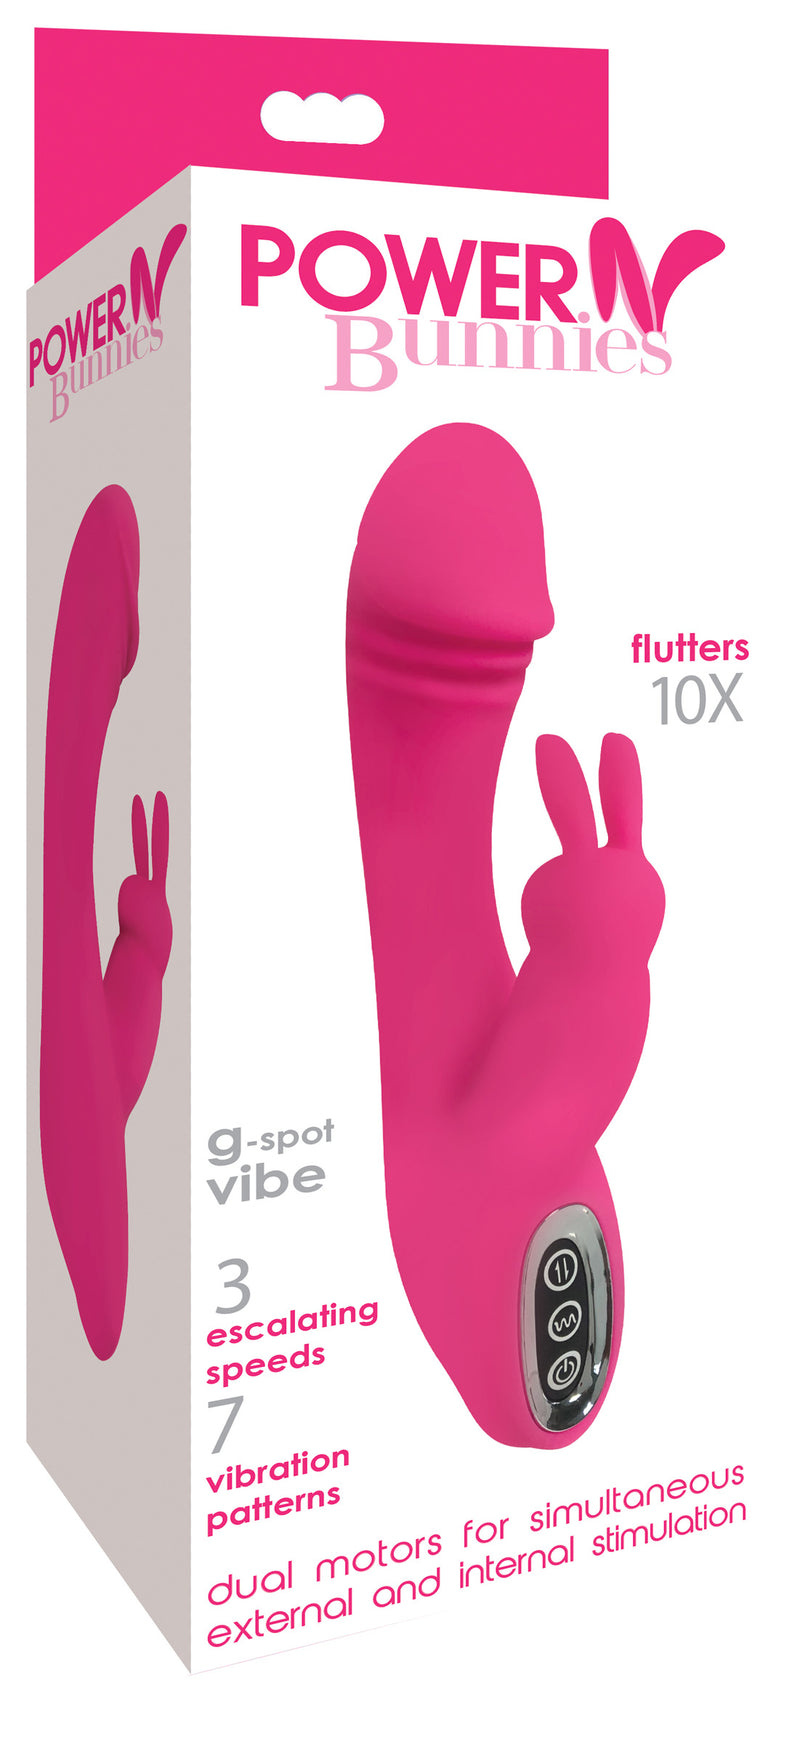 Flutters 10X G-Spot Rabbit Silicone Vibrator gspot-vibrators from Power Bunnies